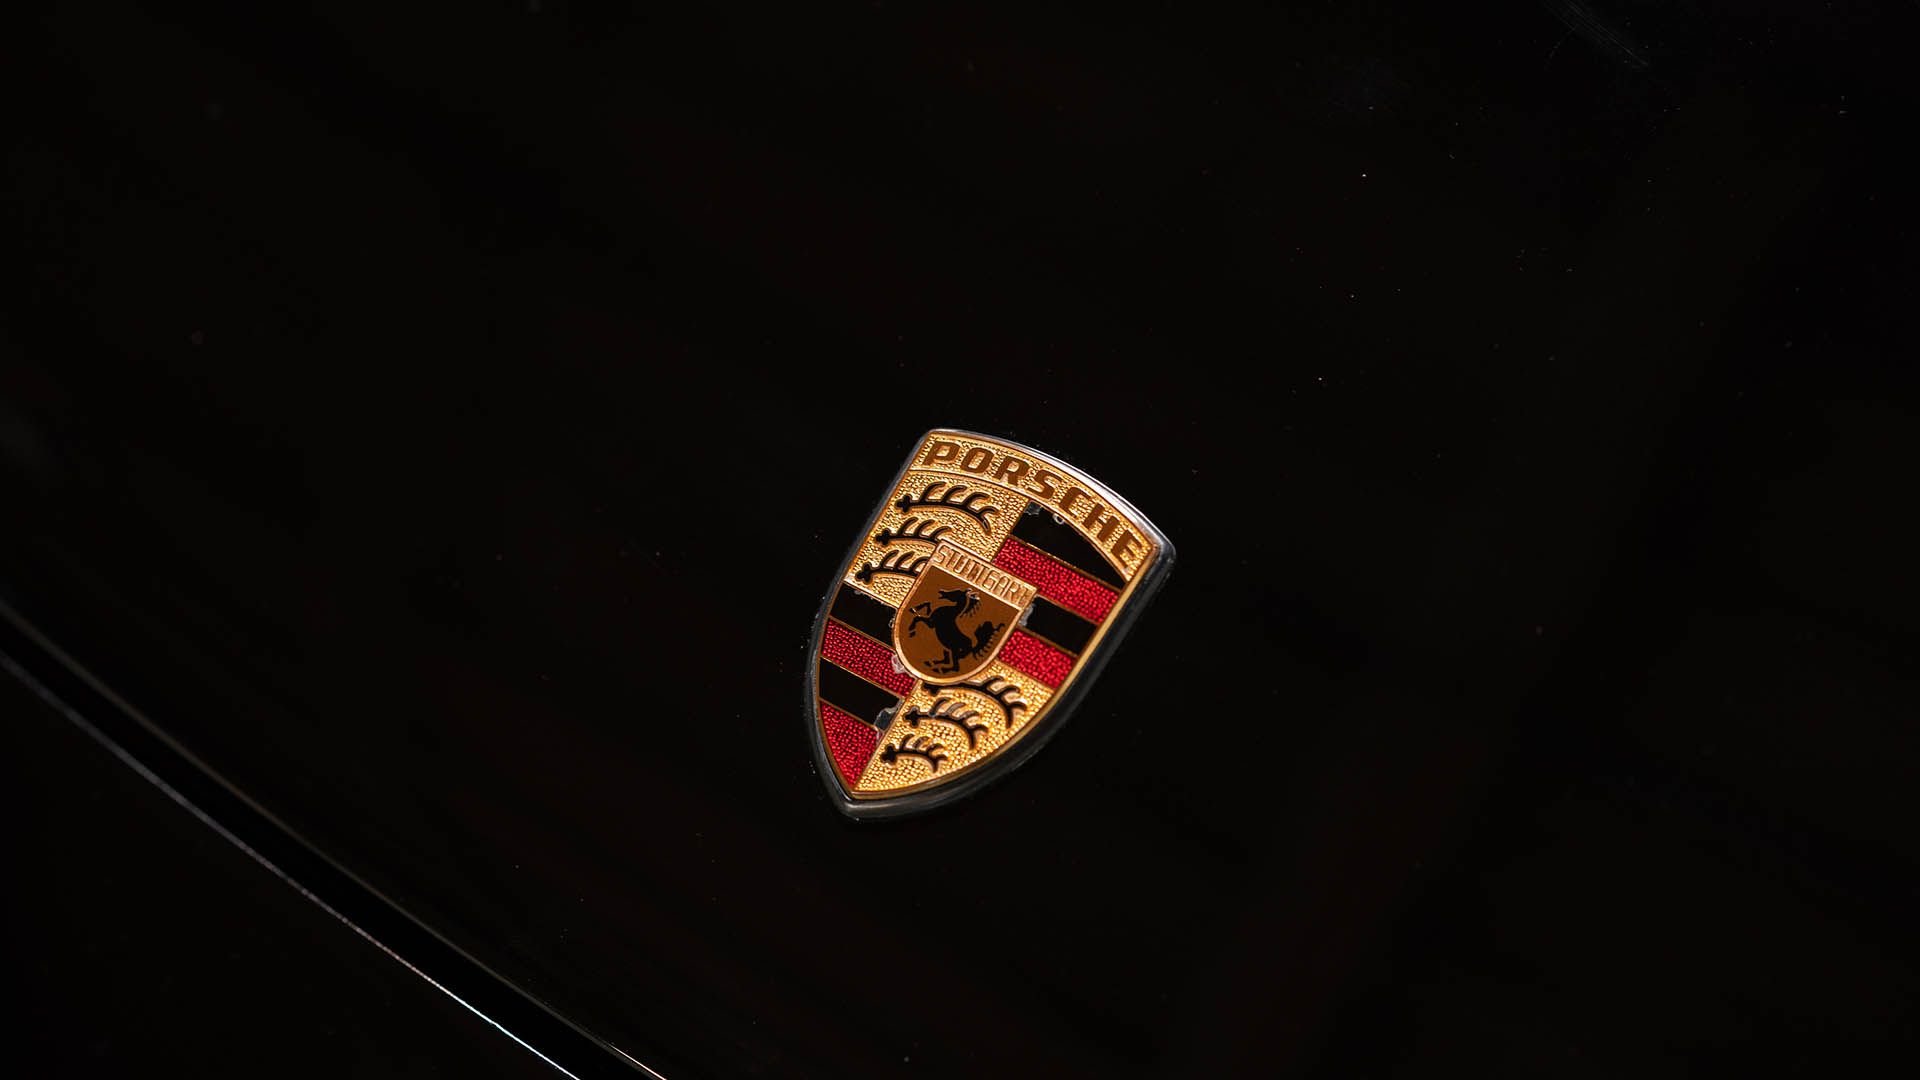 For Sale 1993 Porsche 968 Club Sport